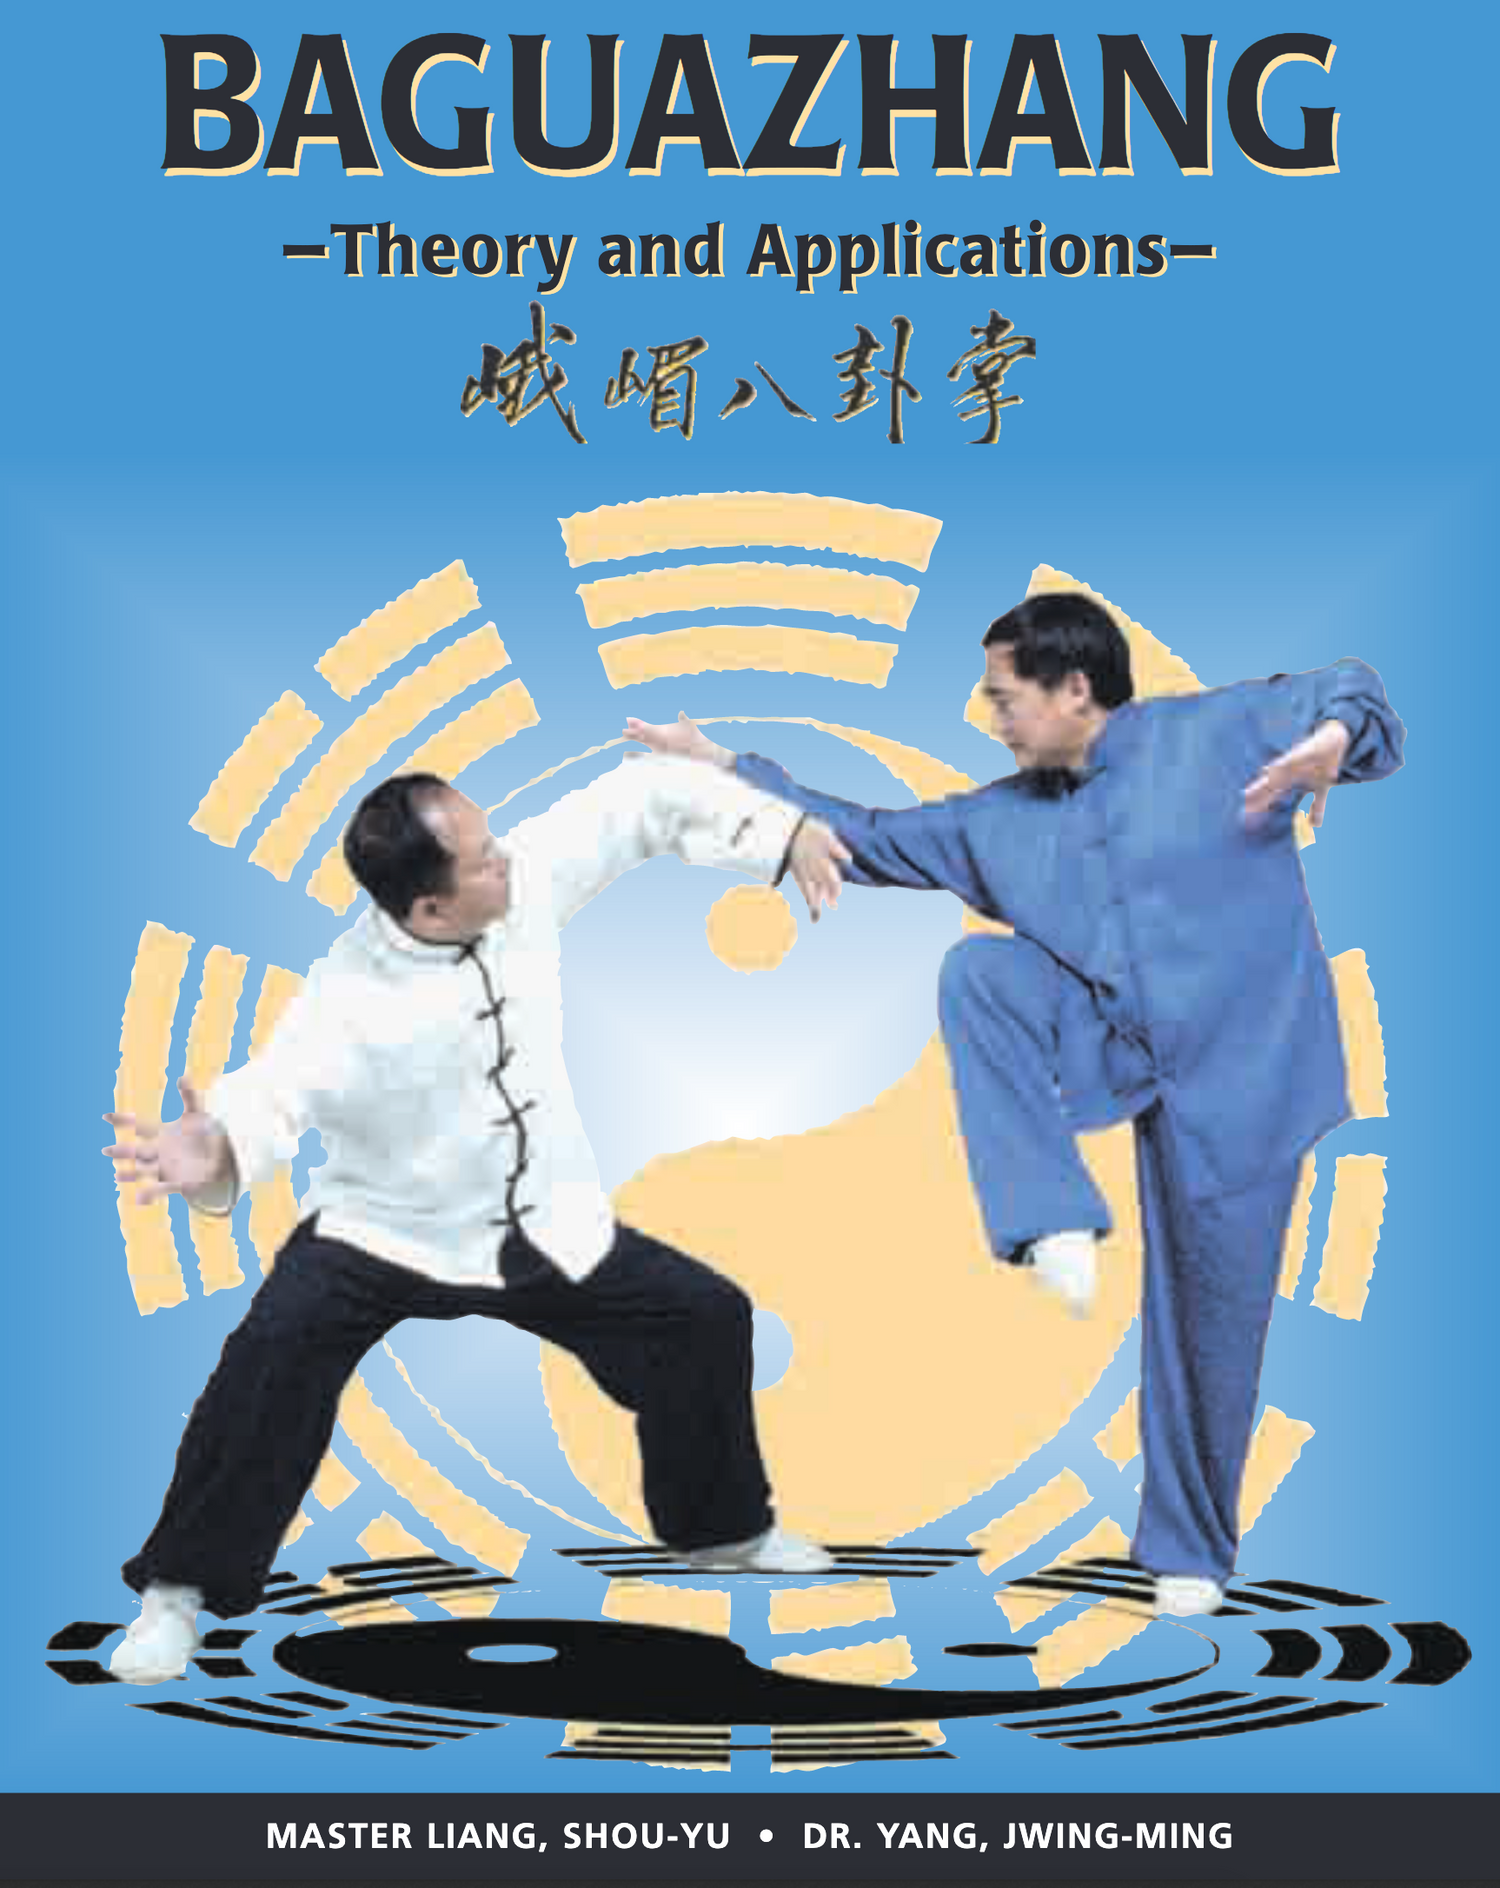 Baguazhang Theory and Applications Book by Dr. Yang, Jwing-Ming, Liang, Shou-Yu - Budovideos Inc